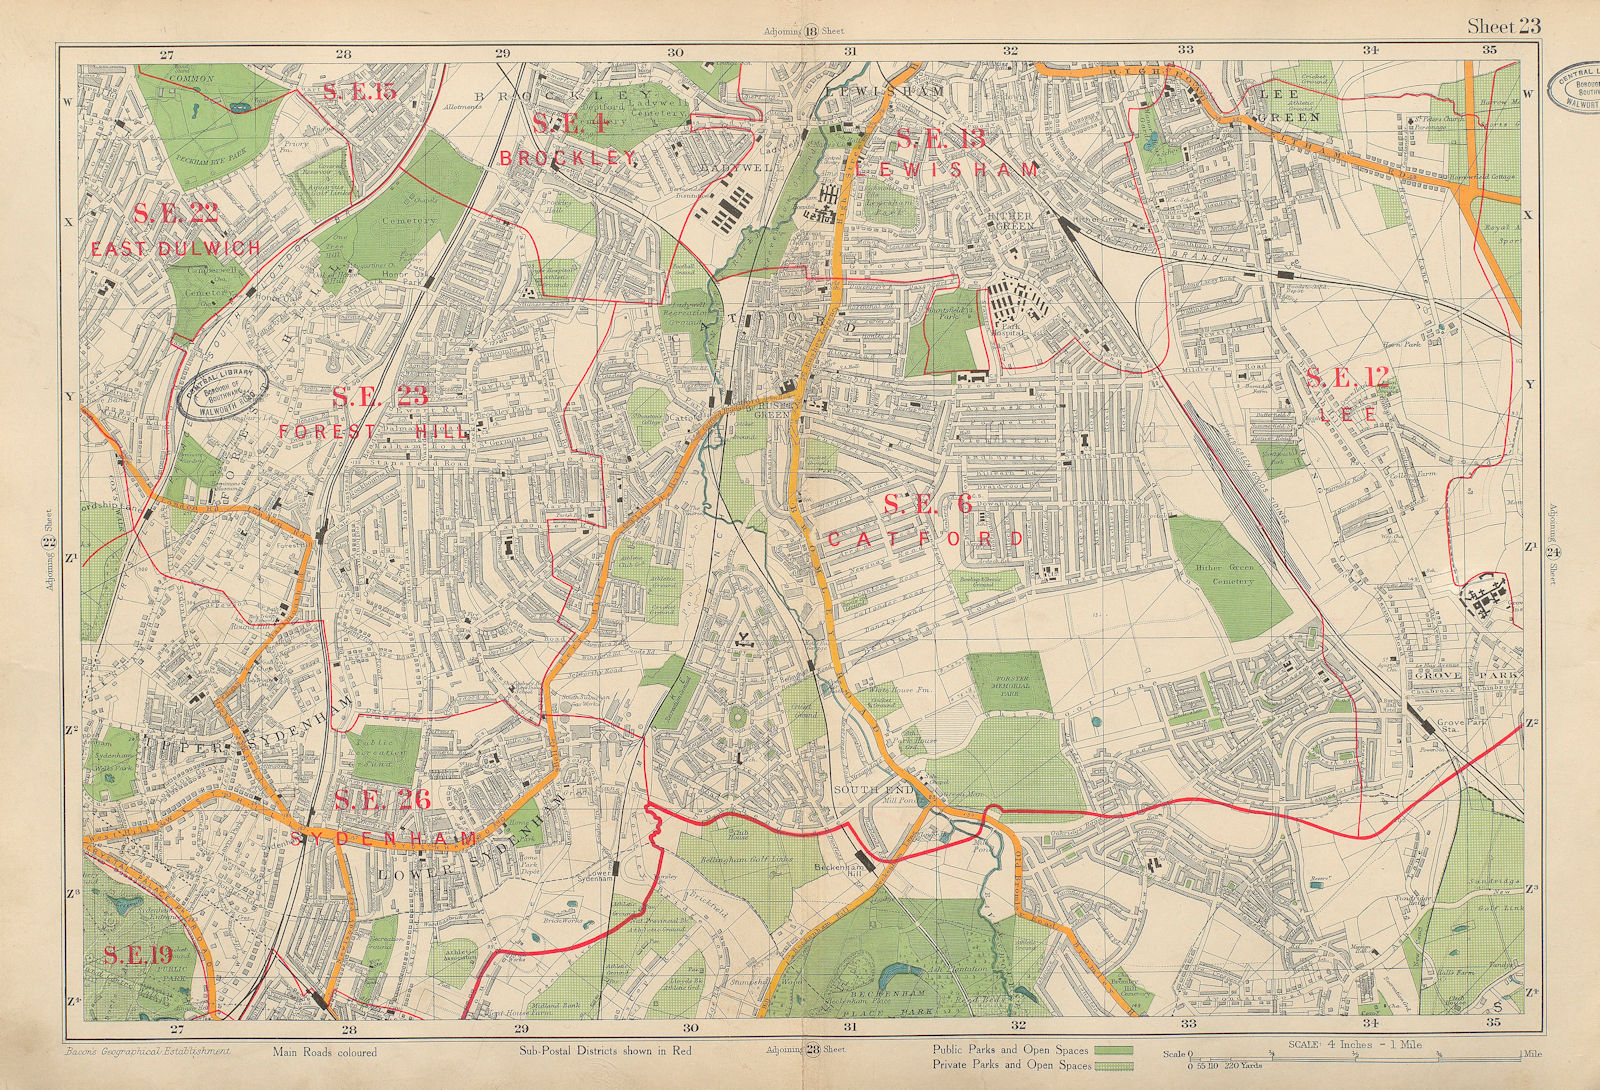 CATFORD Lee Brockley Lewisham East Dulwich Forest Hill Sydenham. BACON 1934 map